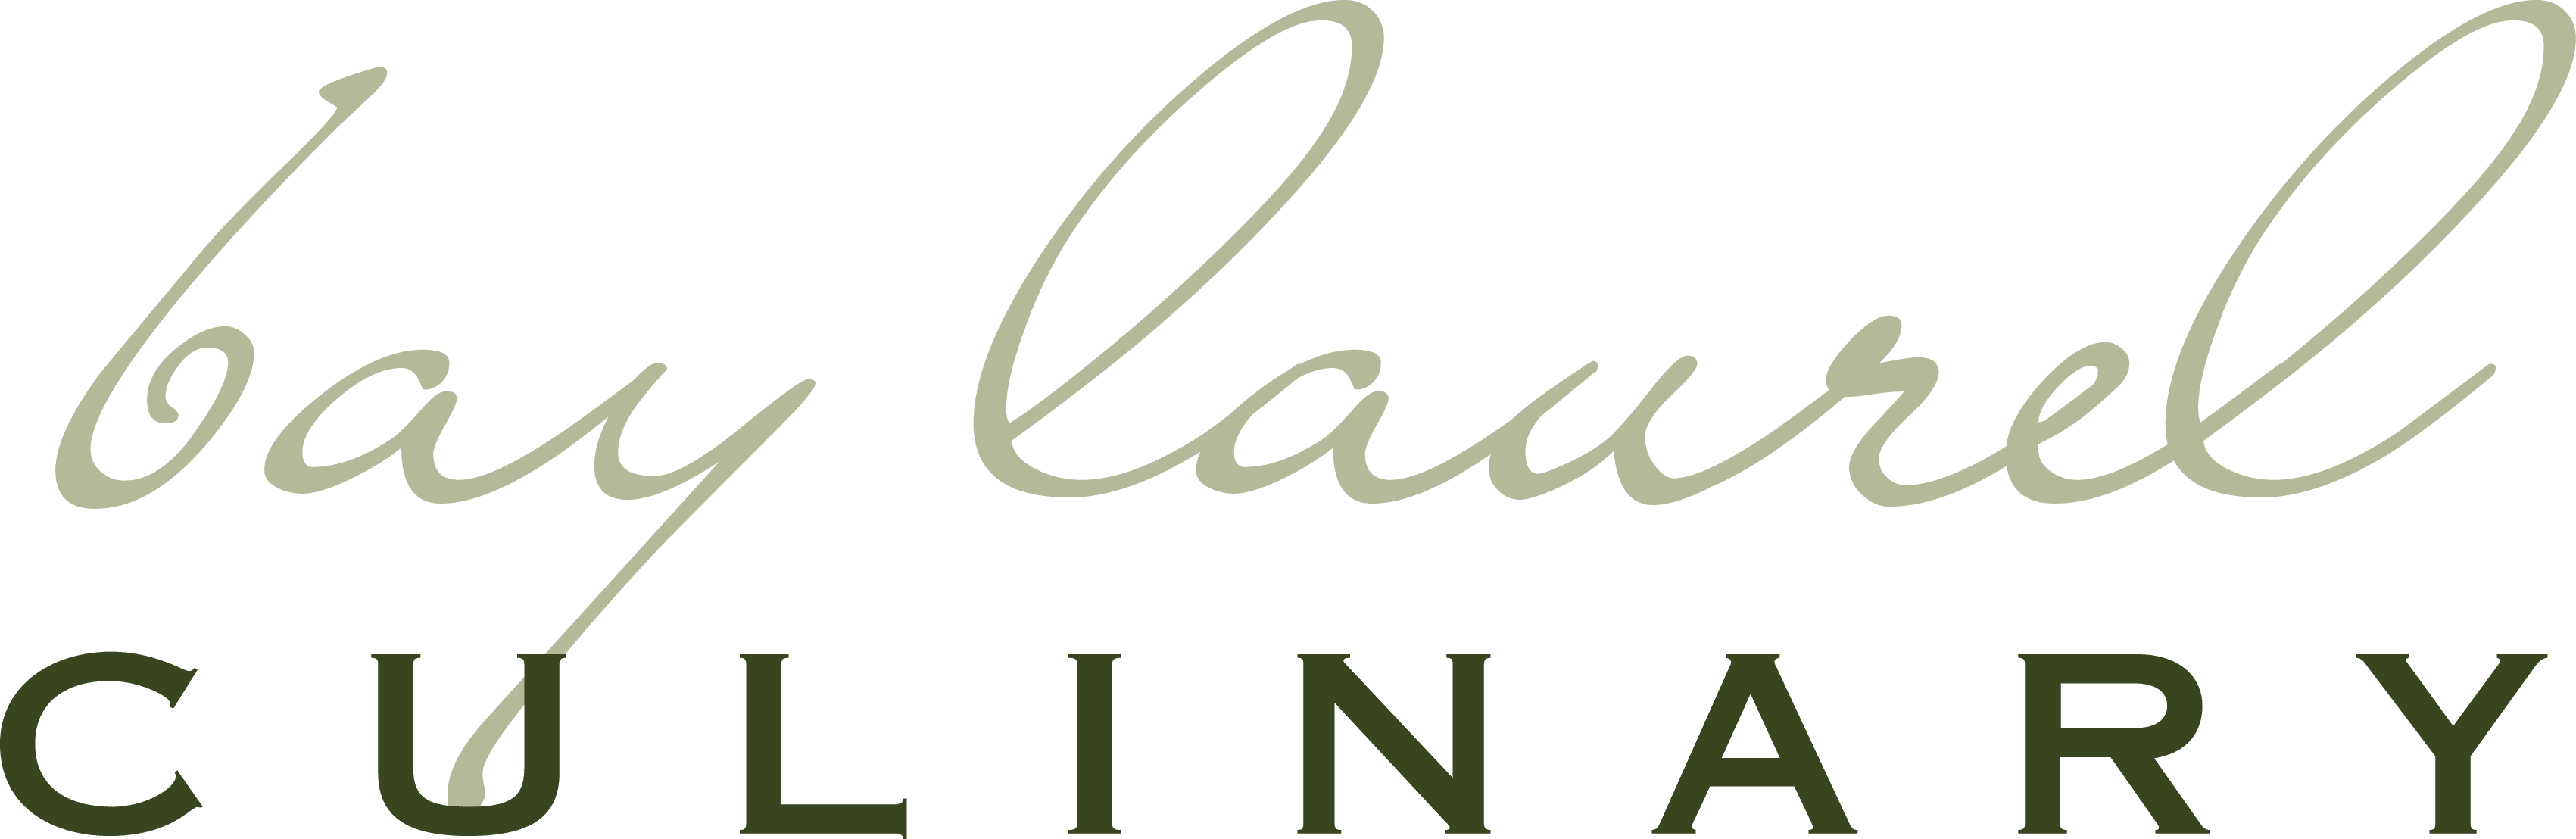 Bay laurel culinary logo.